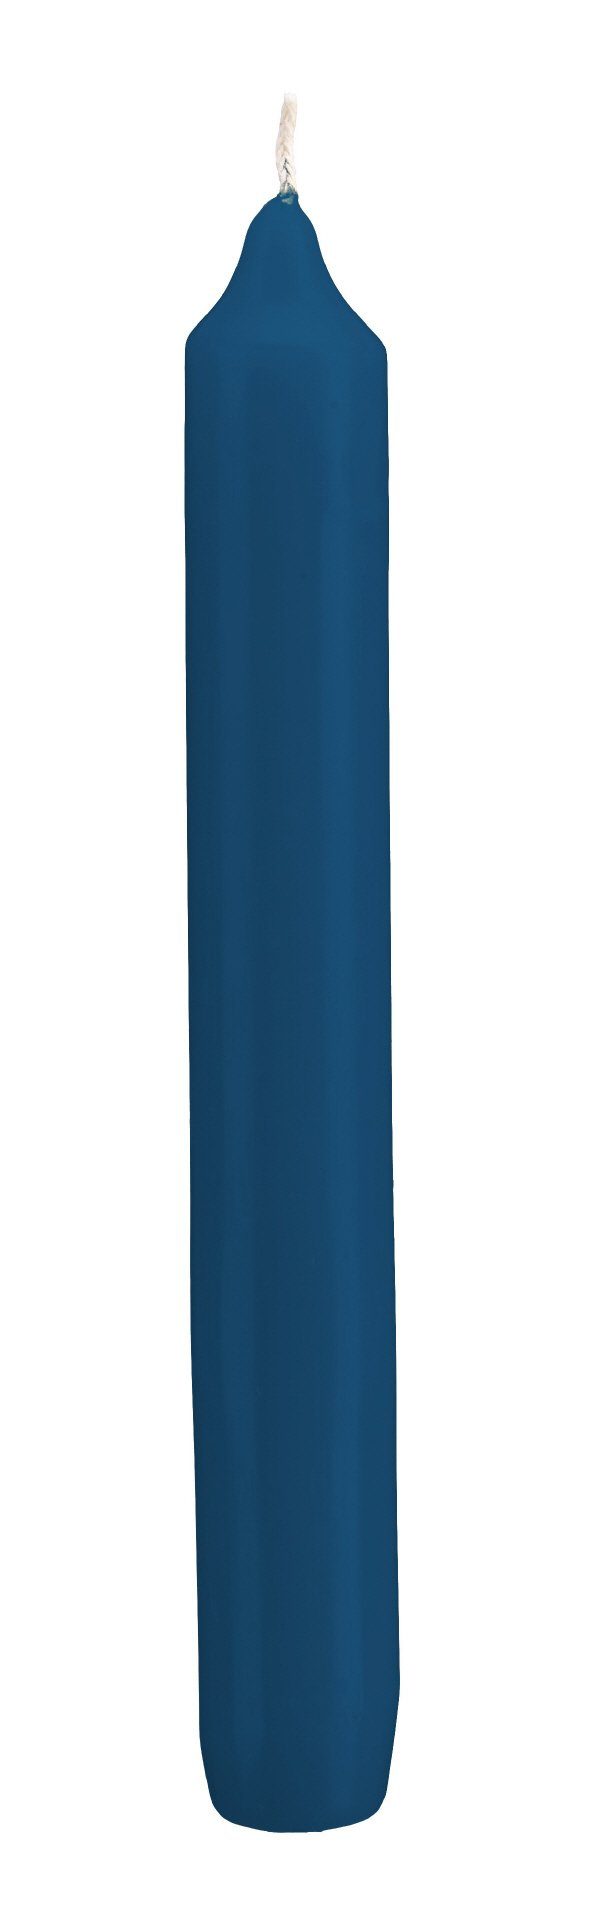 Kopschitz Kerzen Tafelkerze Leuchterkerzen Petrol Blau 190 x Ø 21 mm, 48 Stück